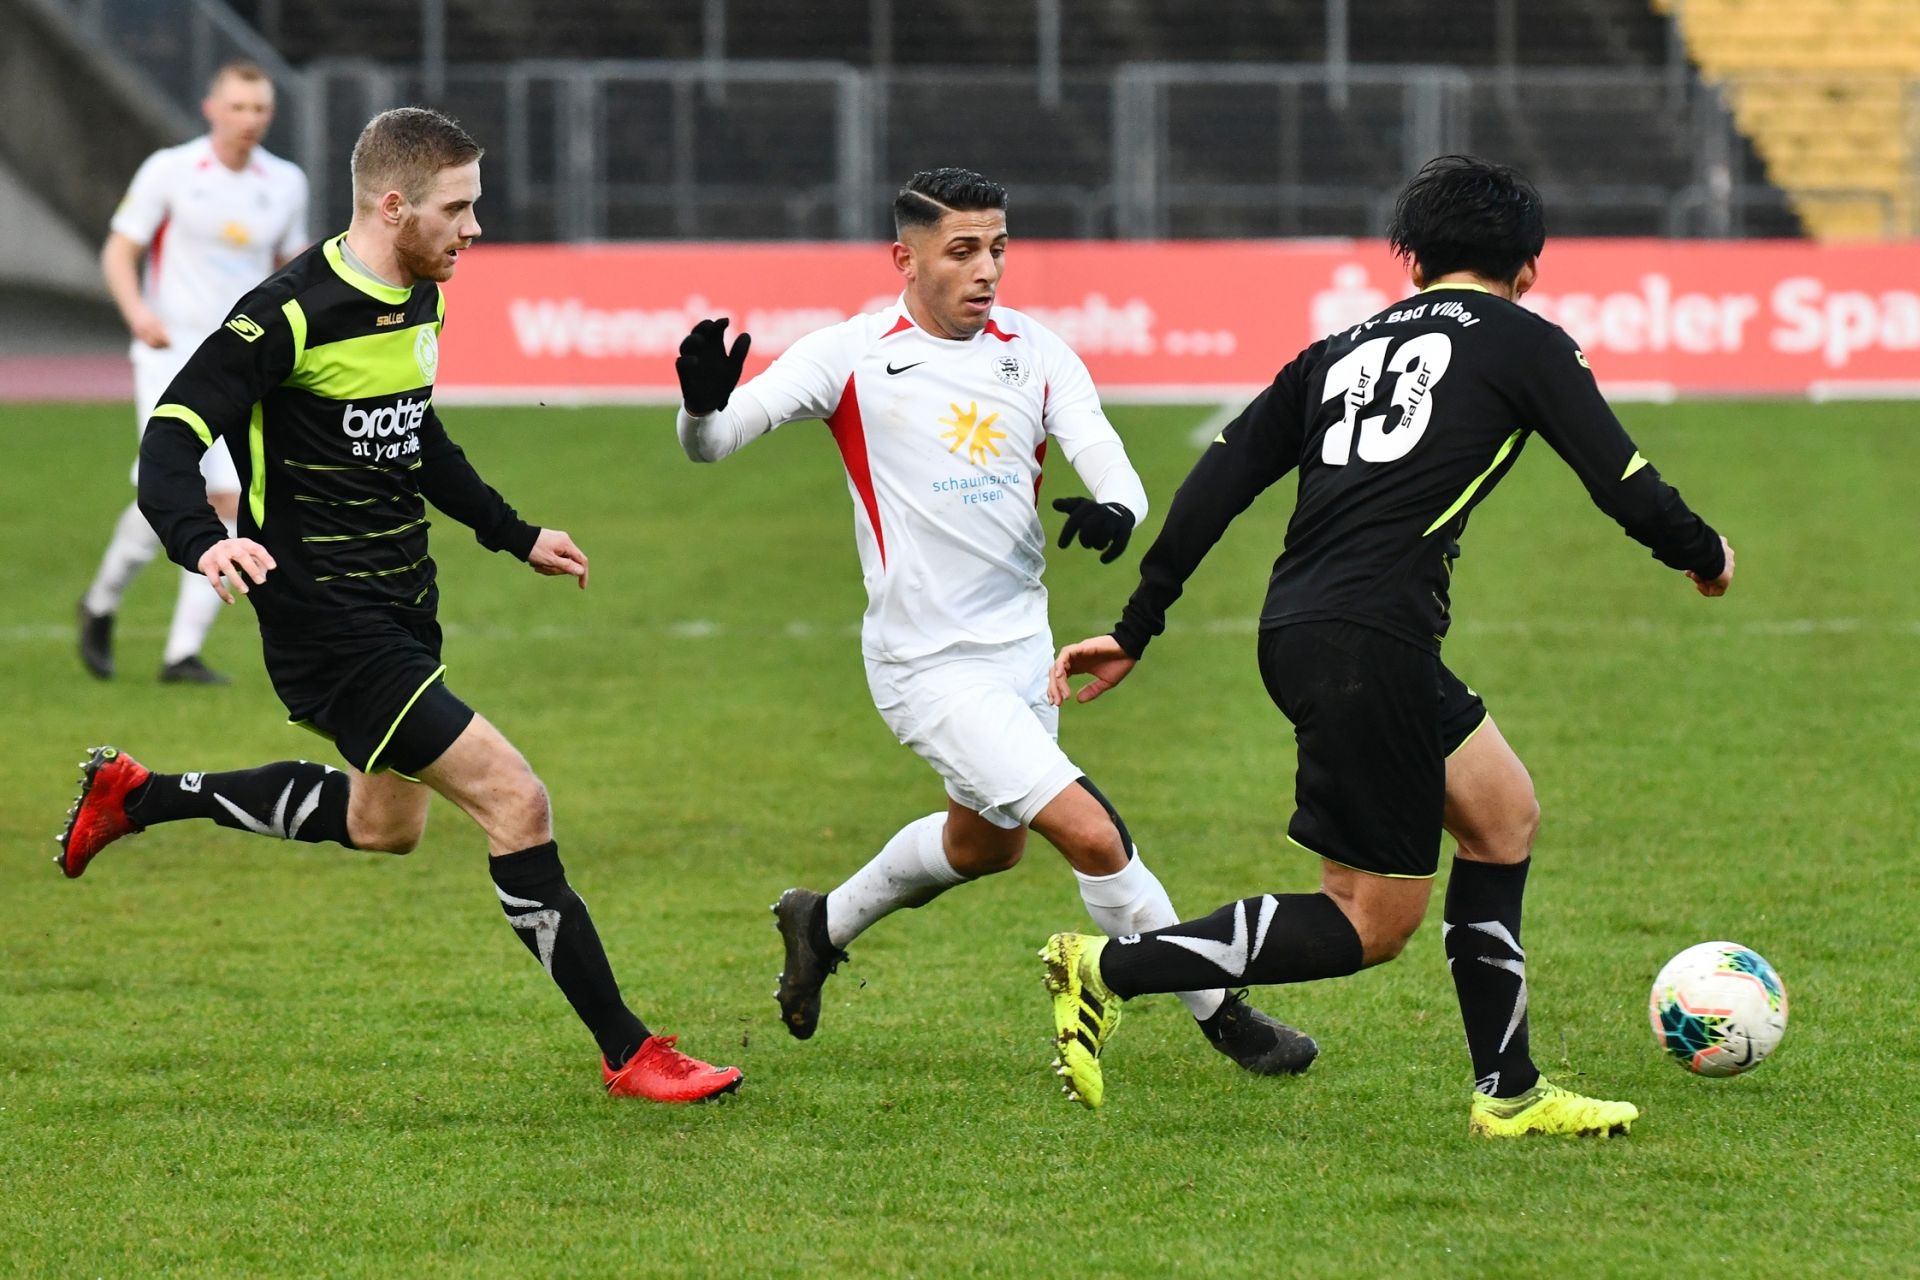 Lotto Hessenliga 2019/2020, KSV Hessen Kassel, FV Bad Vilbel, Endstand 6:1, Nael Najjar (KSV Hessen Kassel)